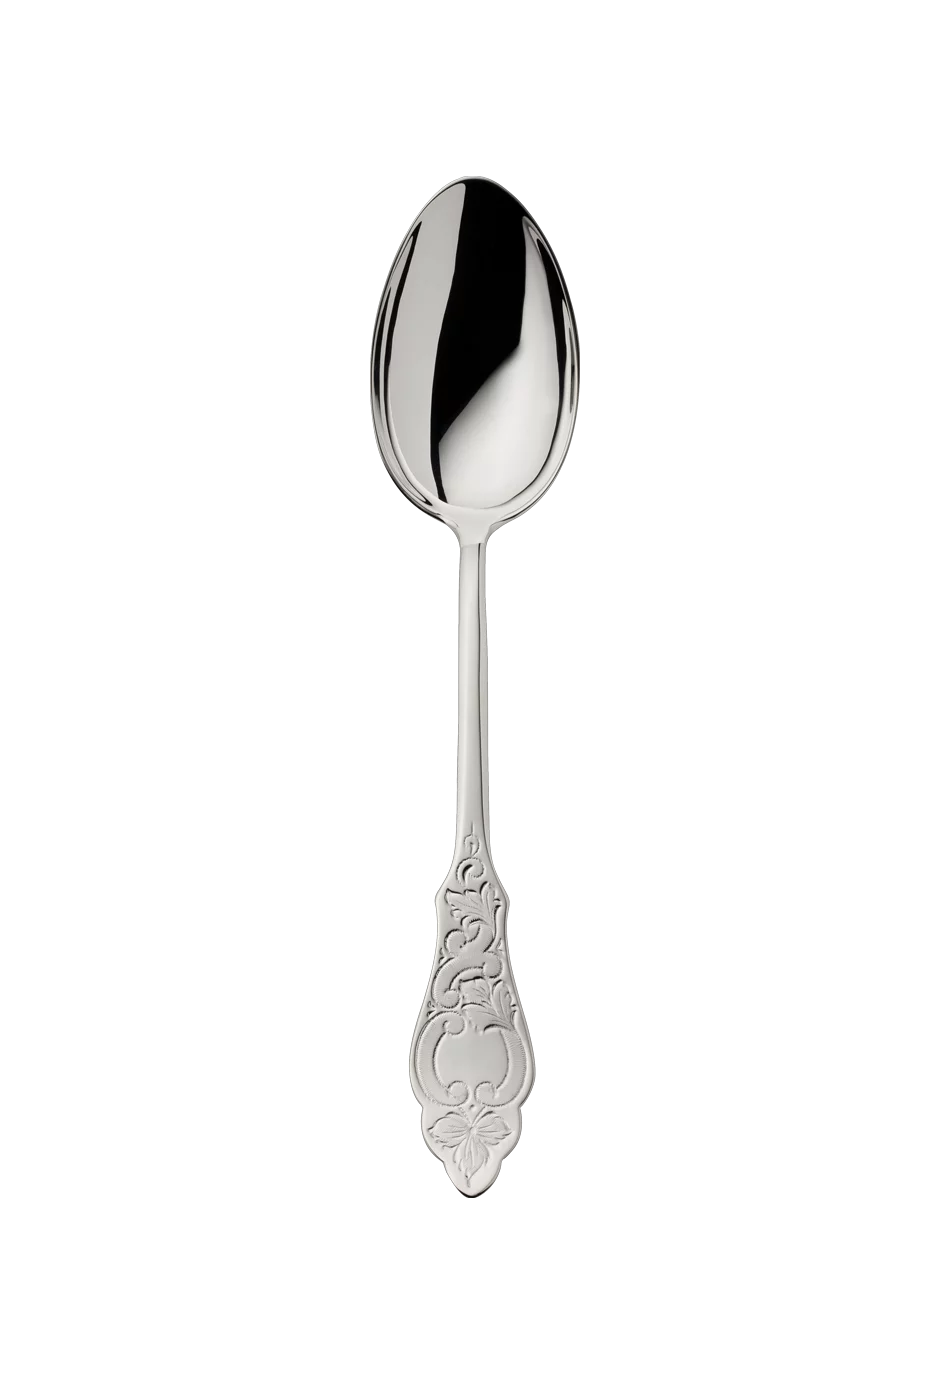 Ostfriesen Table Spoon (150g massive silverplated)